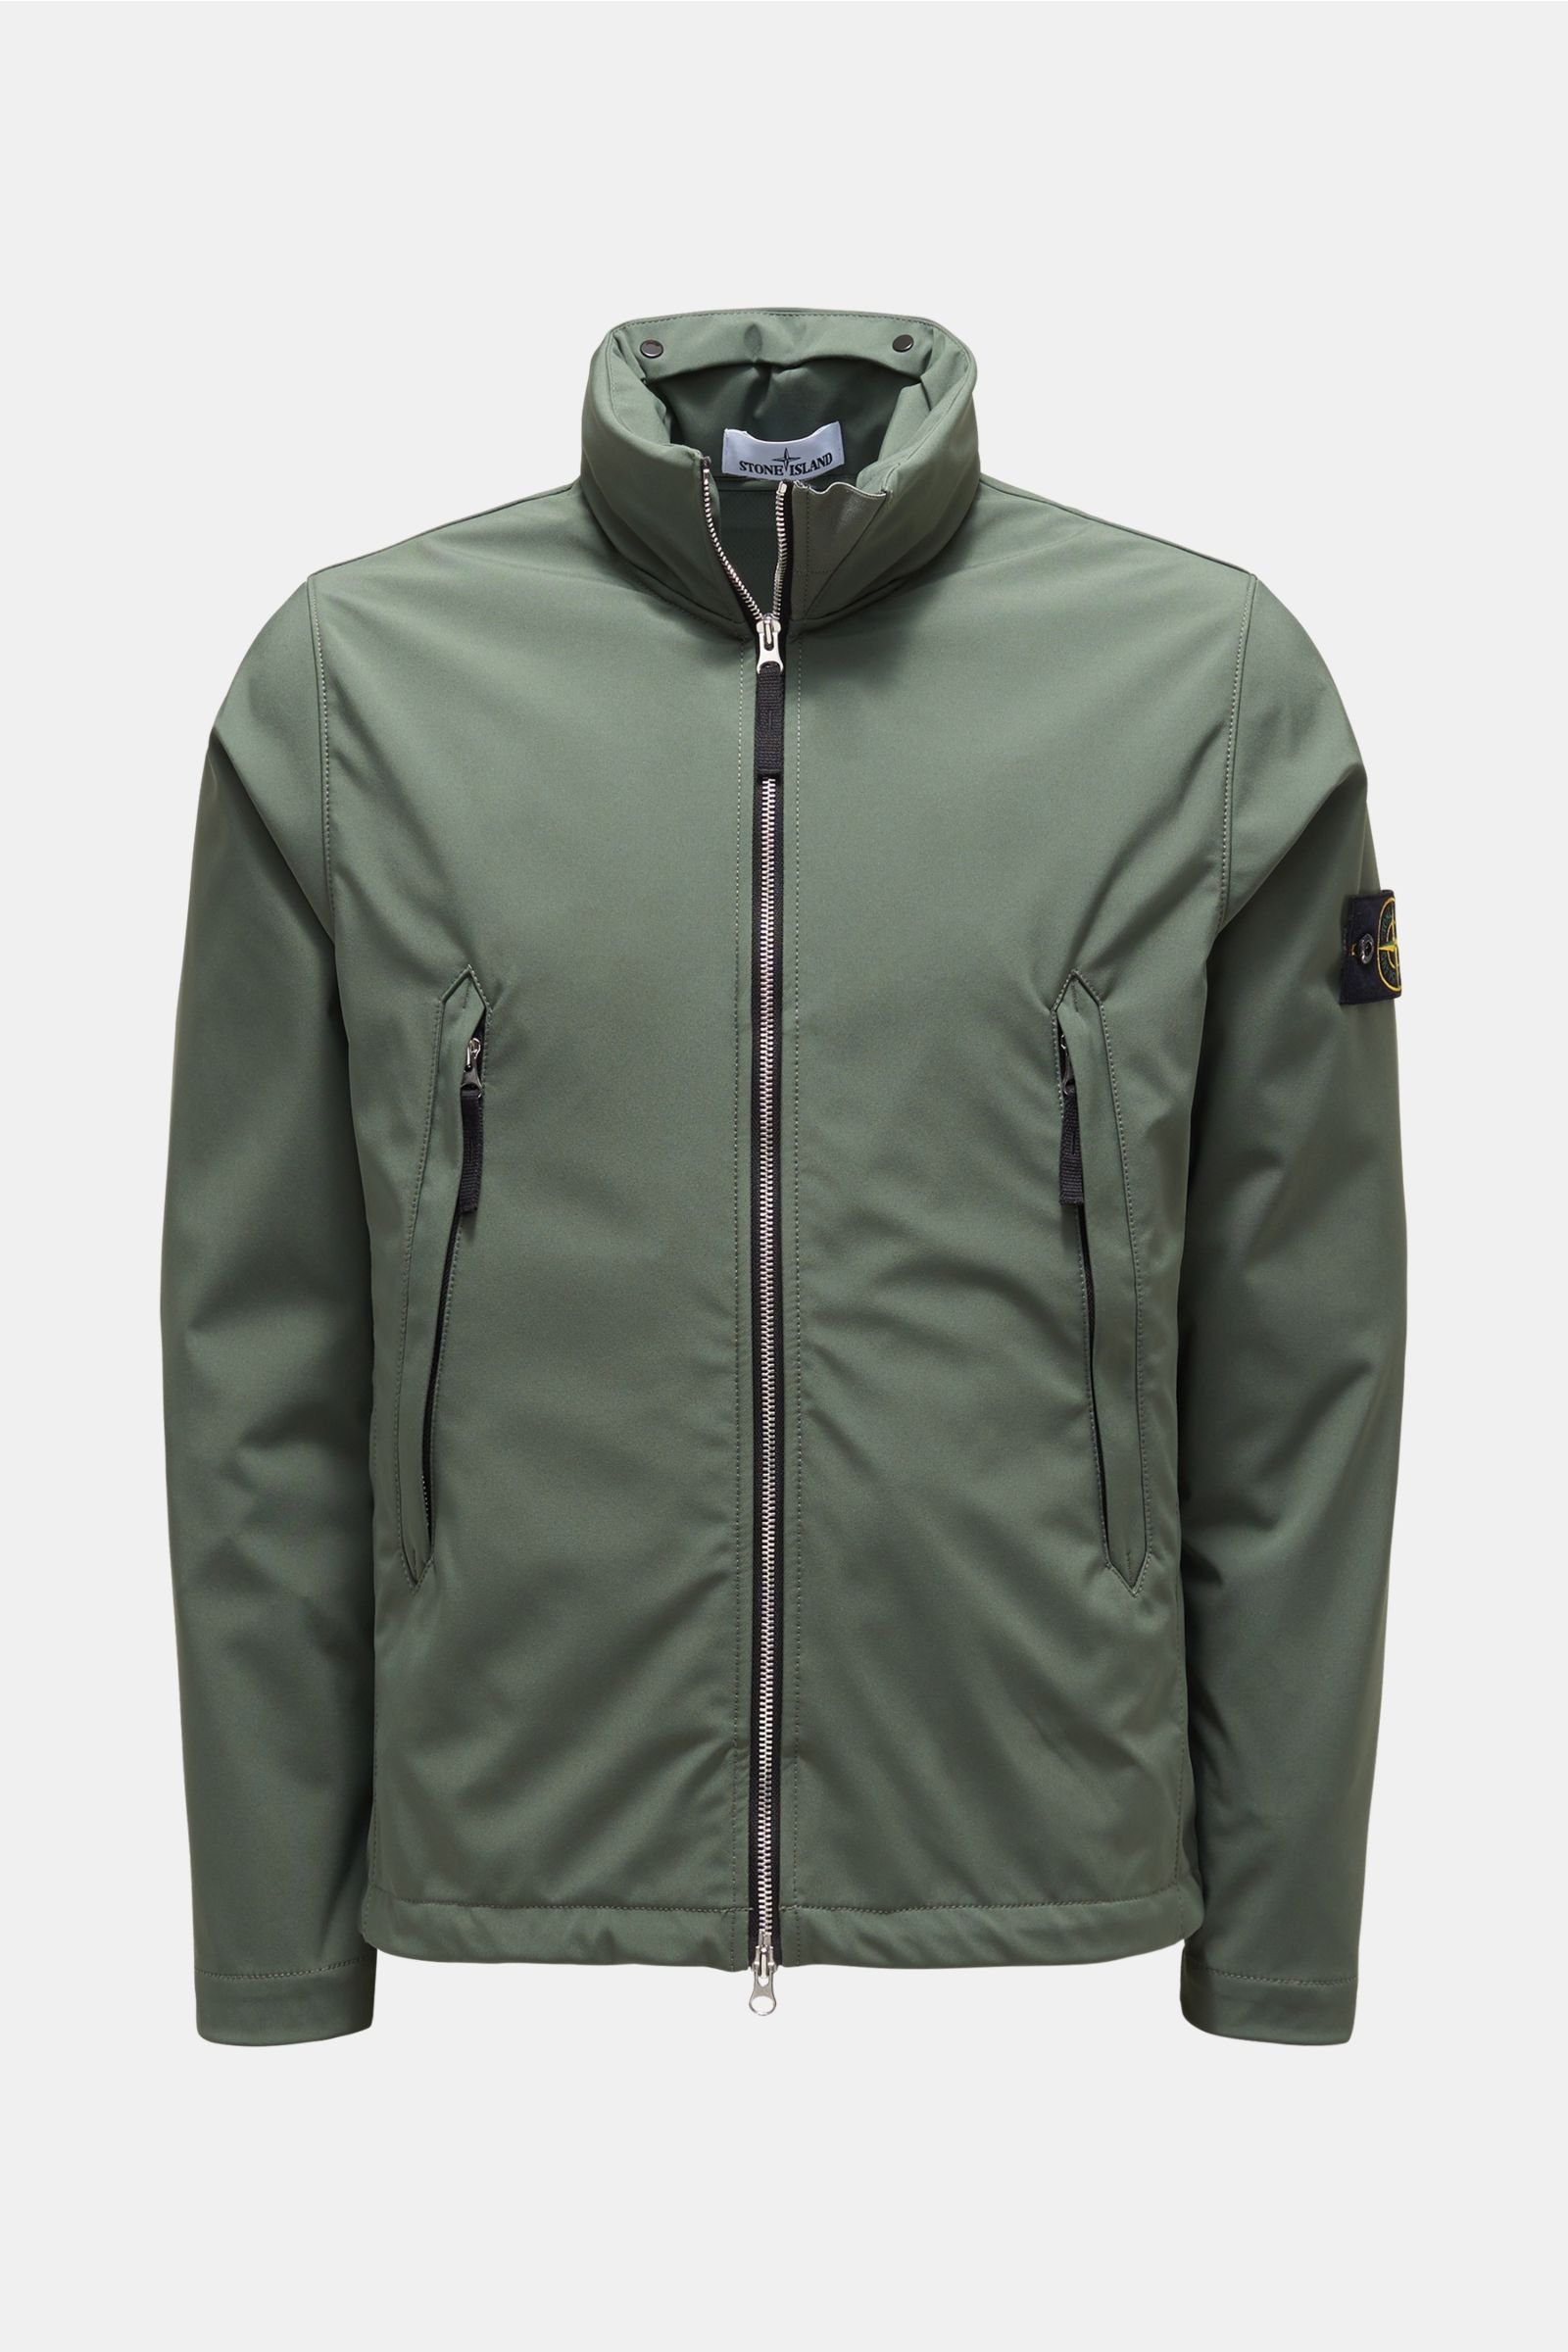 Softshell jacket 'Light Soft Shell-R' grey-green